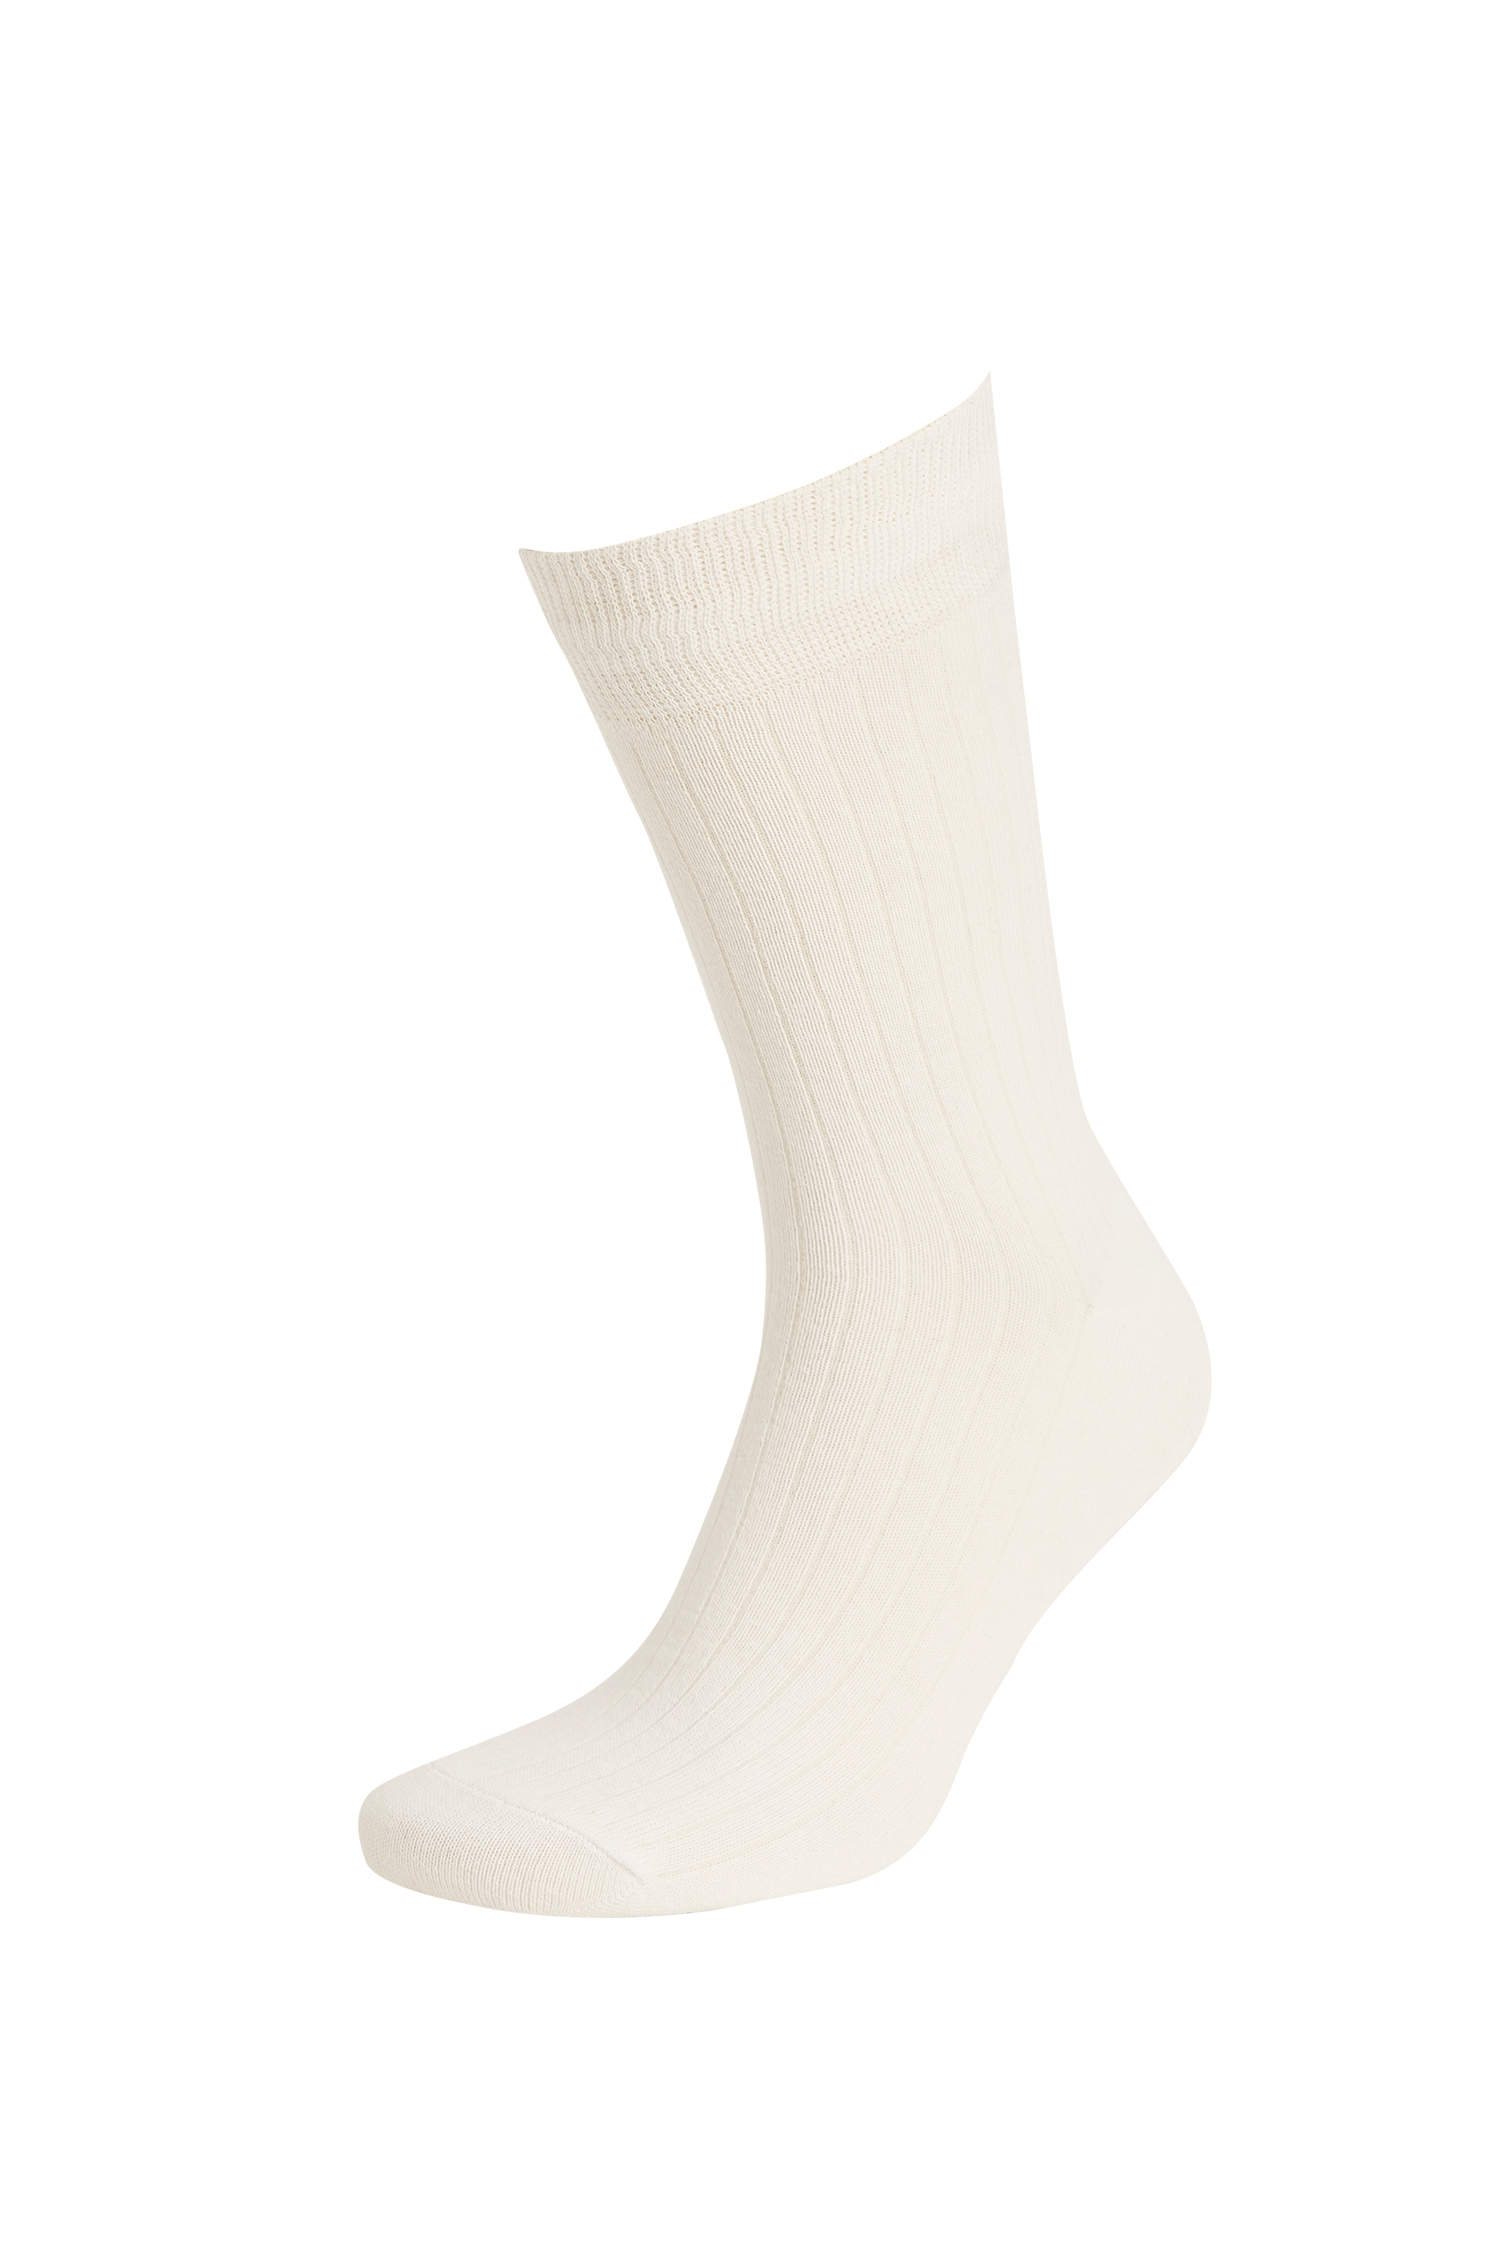 Defacto 5'li Soket Tenis Çorabı. 5